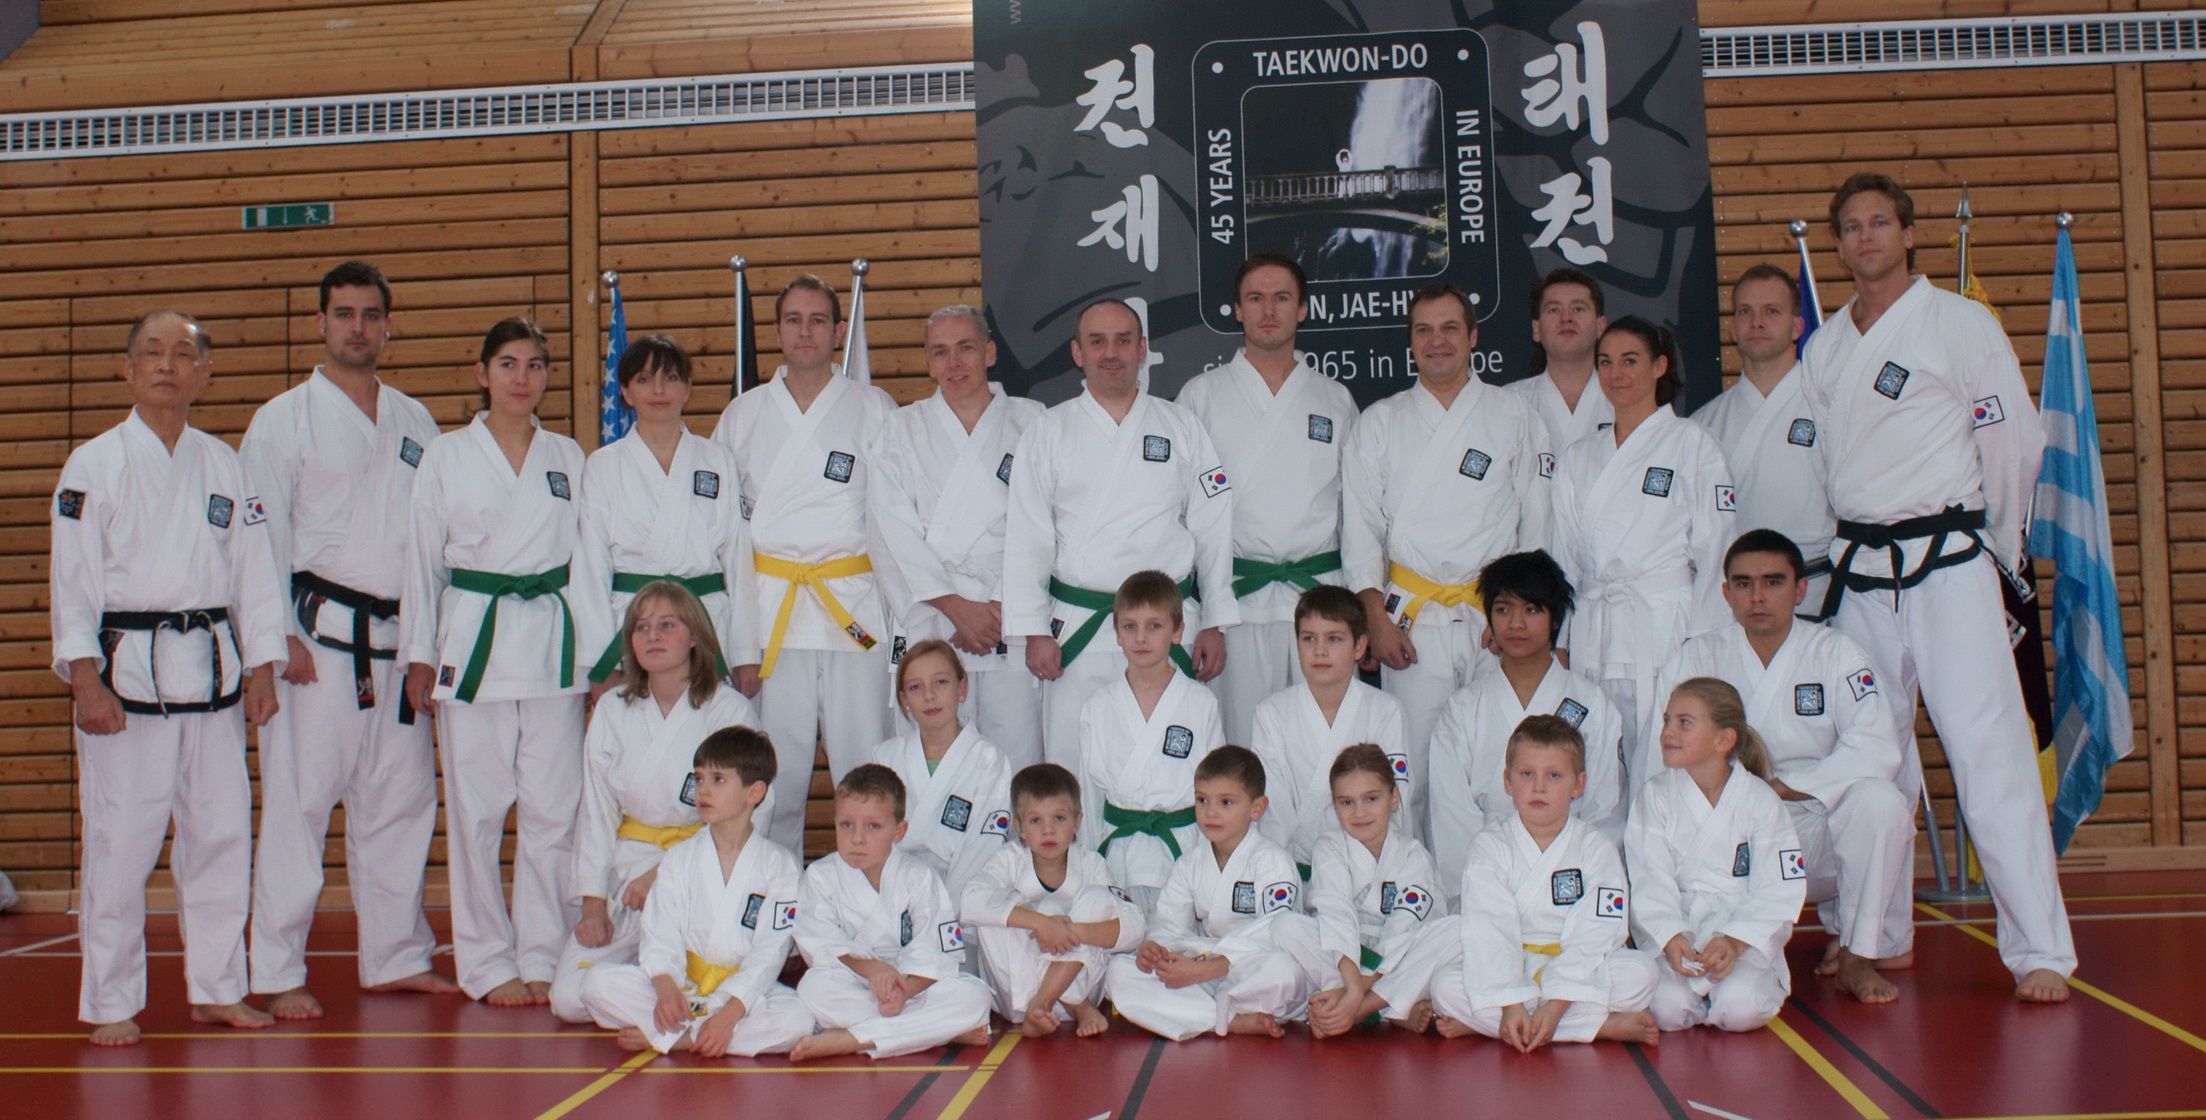 Gruppenfoto taekwondo Ingolstadt